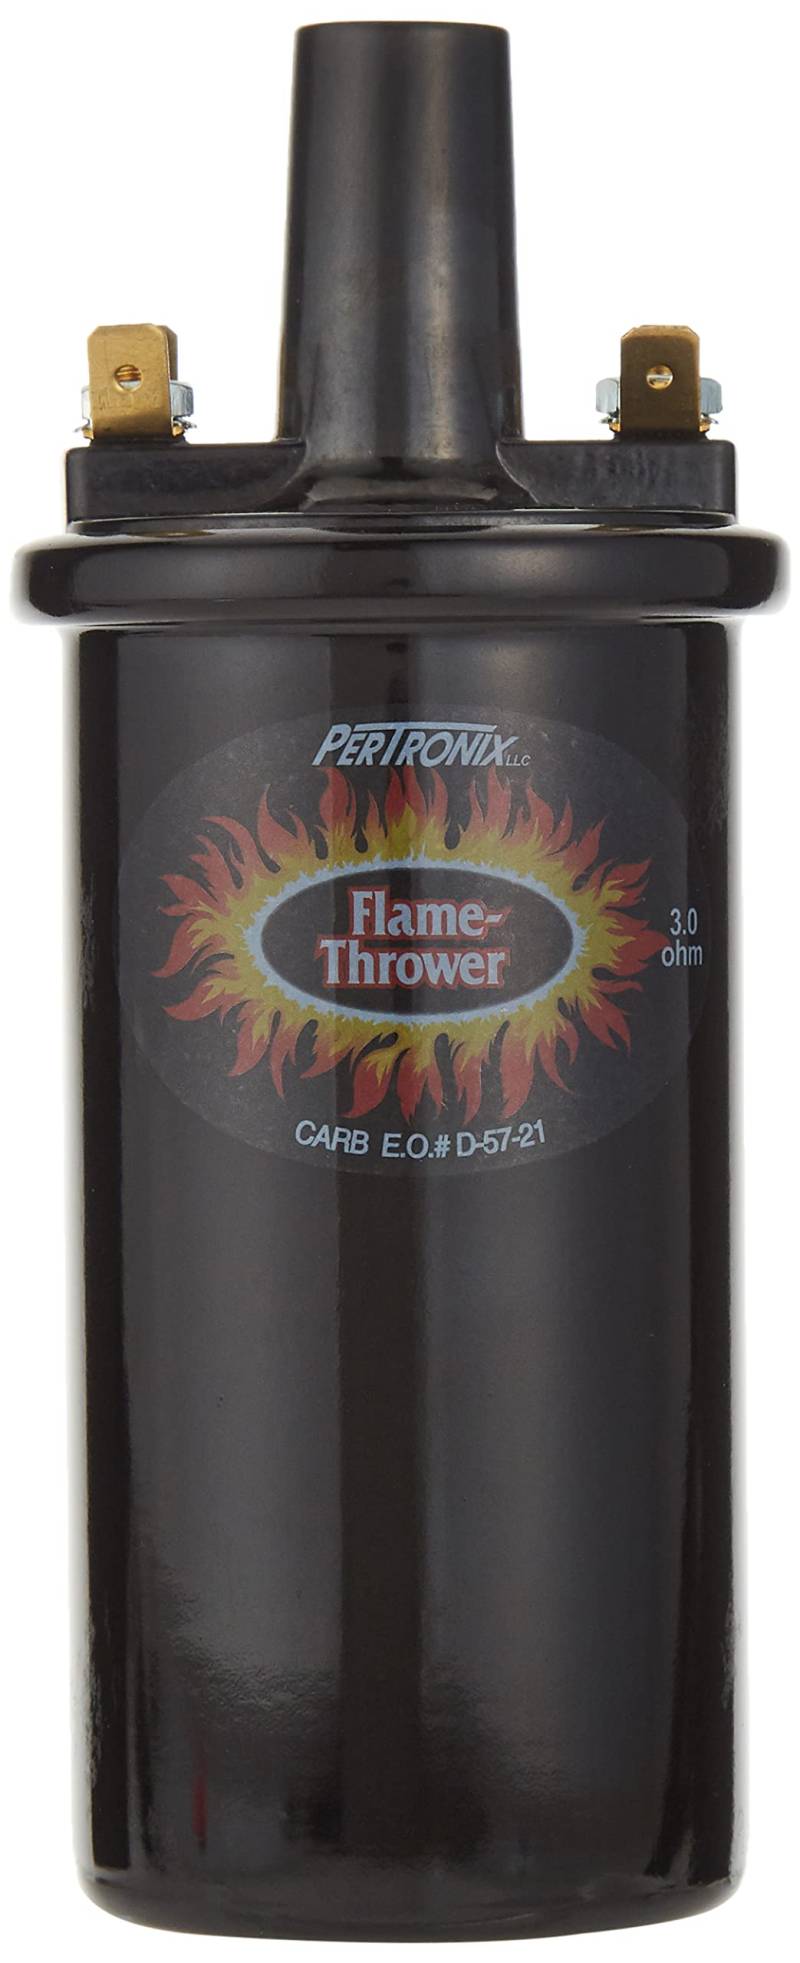 Pertronix 40511 Flame-Thrower, 40.000 Volt, 3.0 ohm Coil von Pertronix